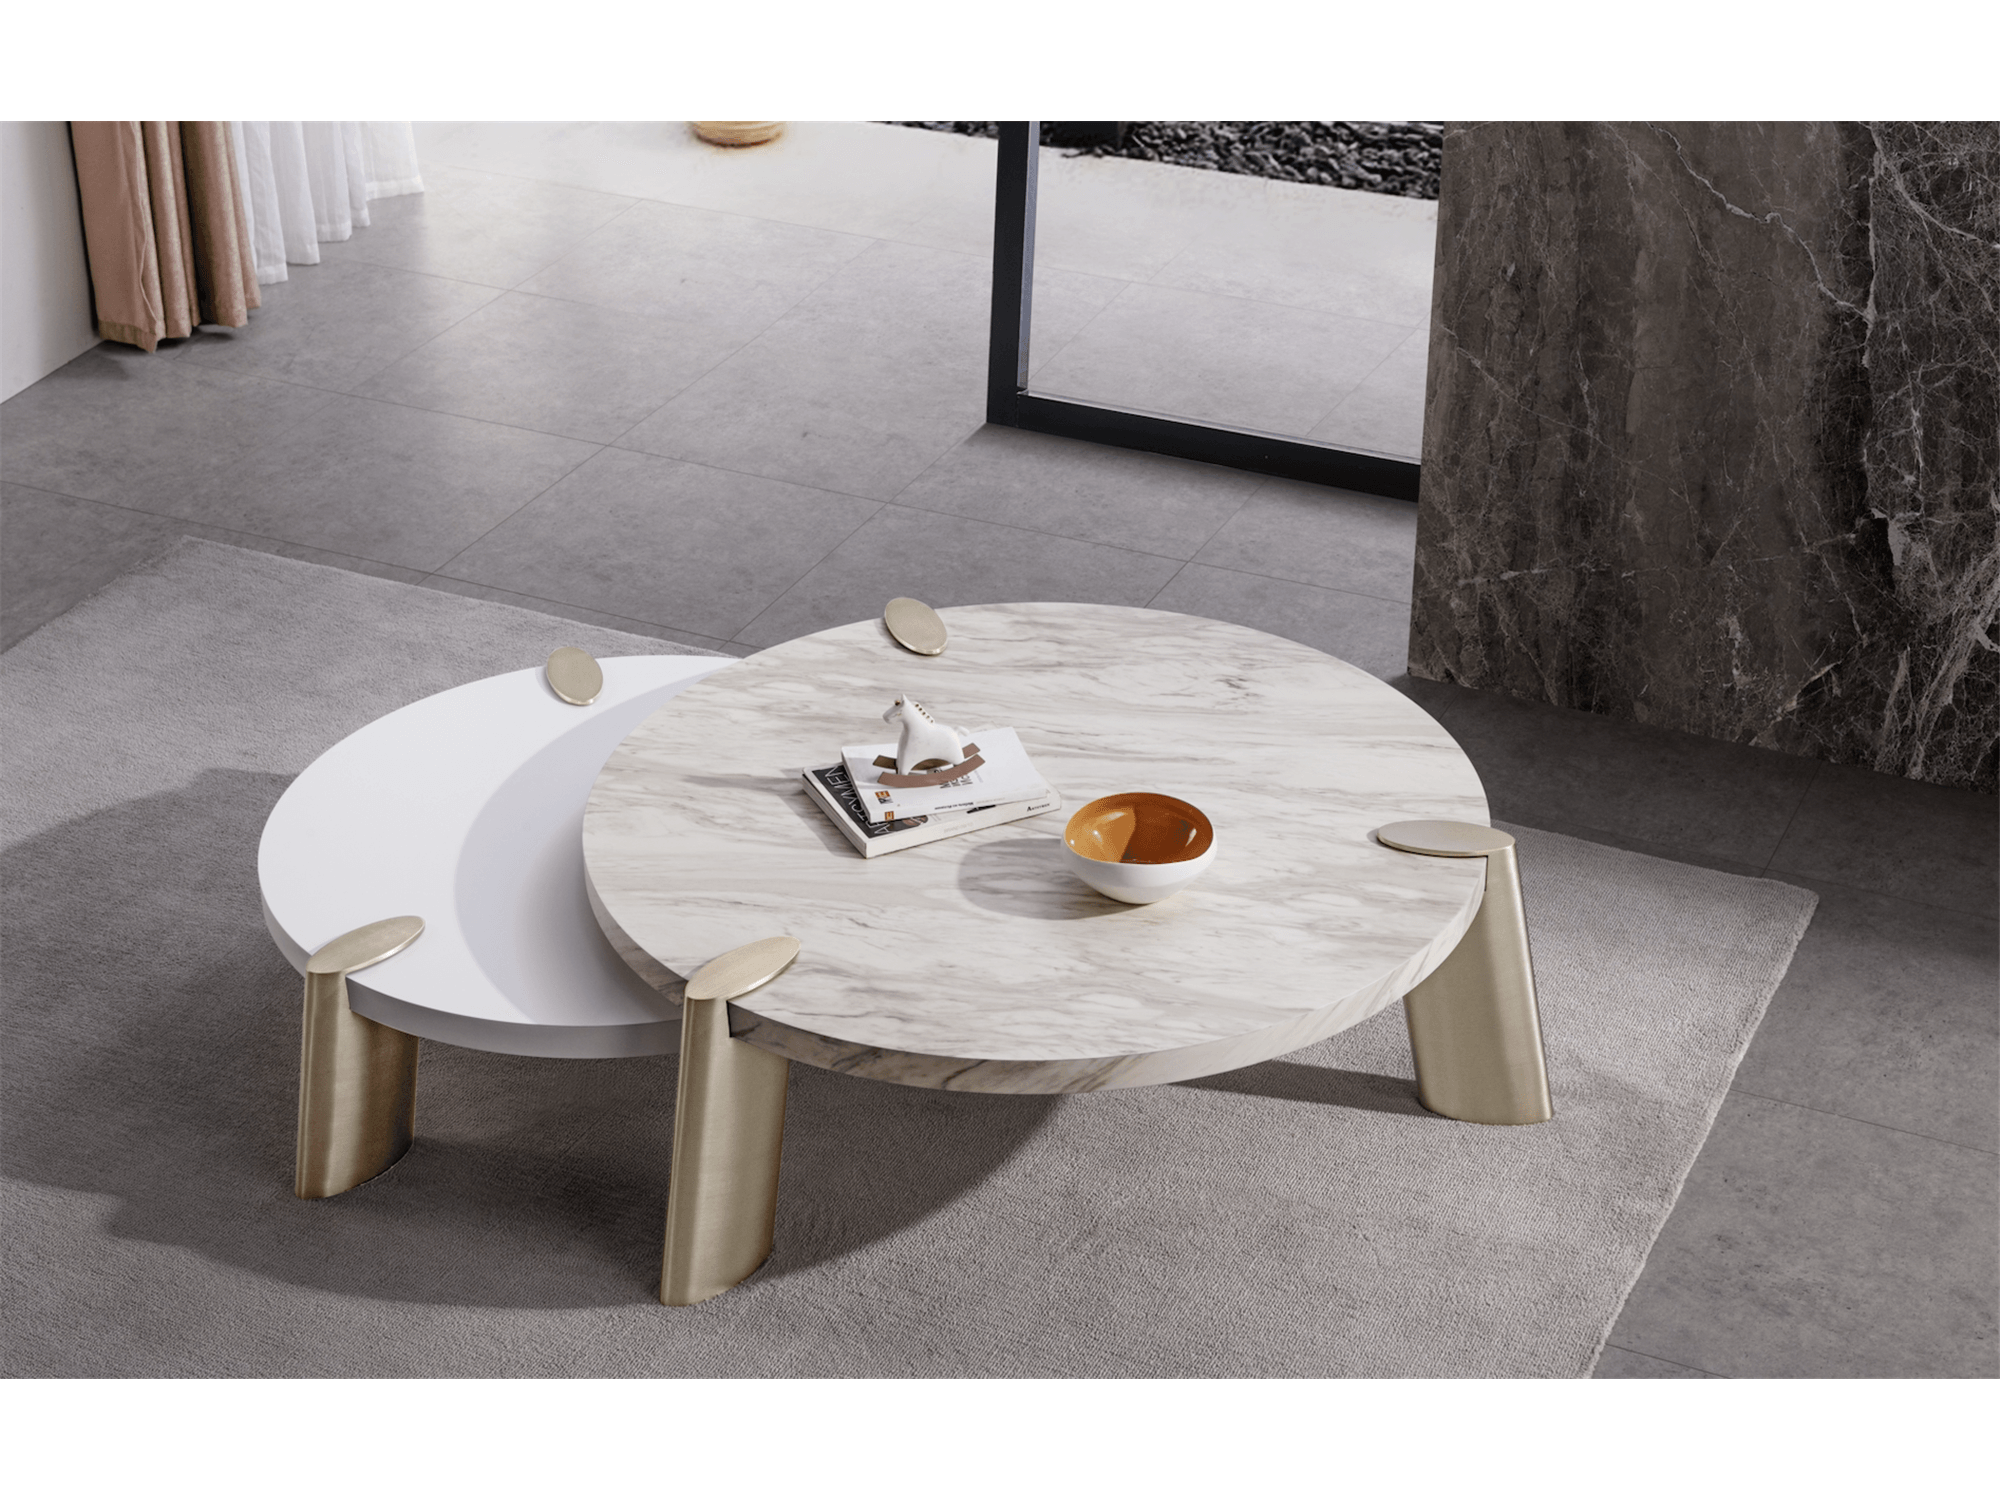 Marek Coffee Table - Euro Living Furniture